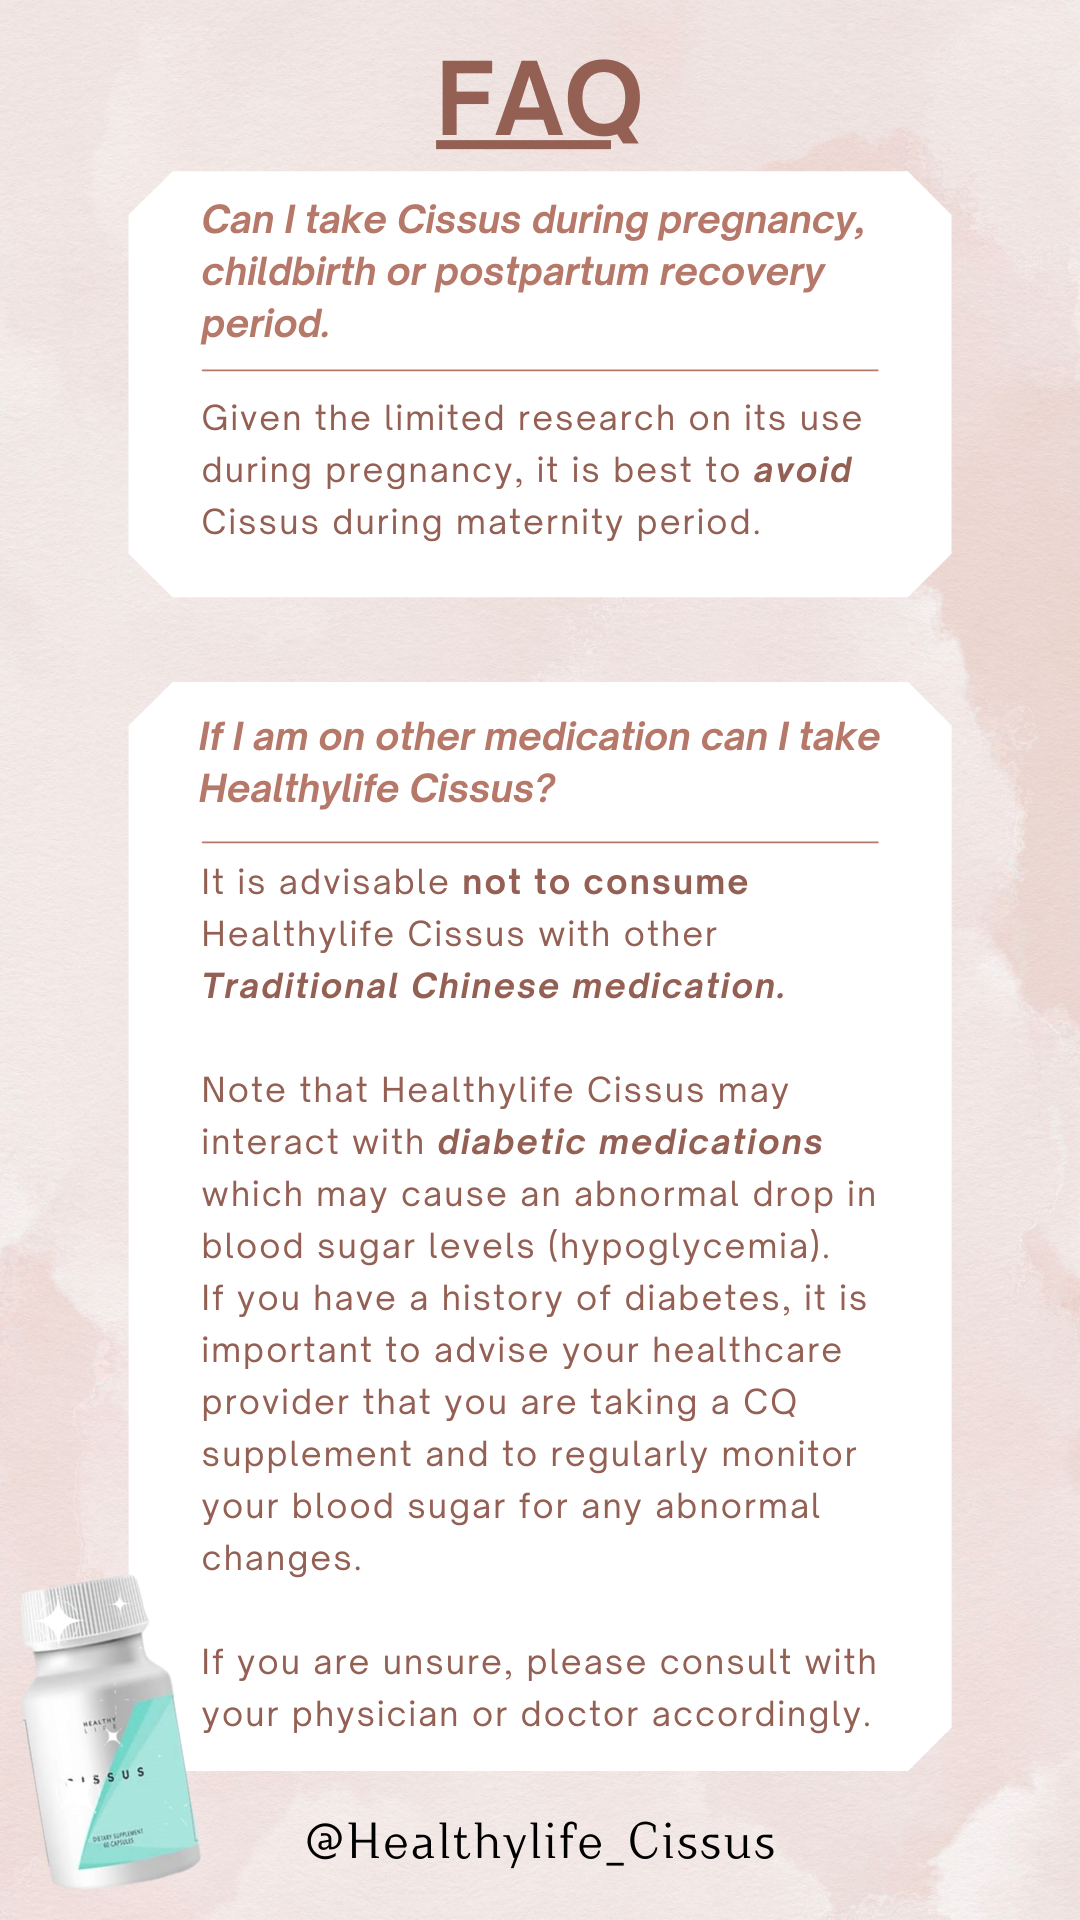 Healthylife Cissus